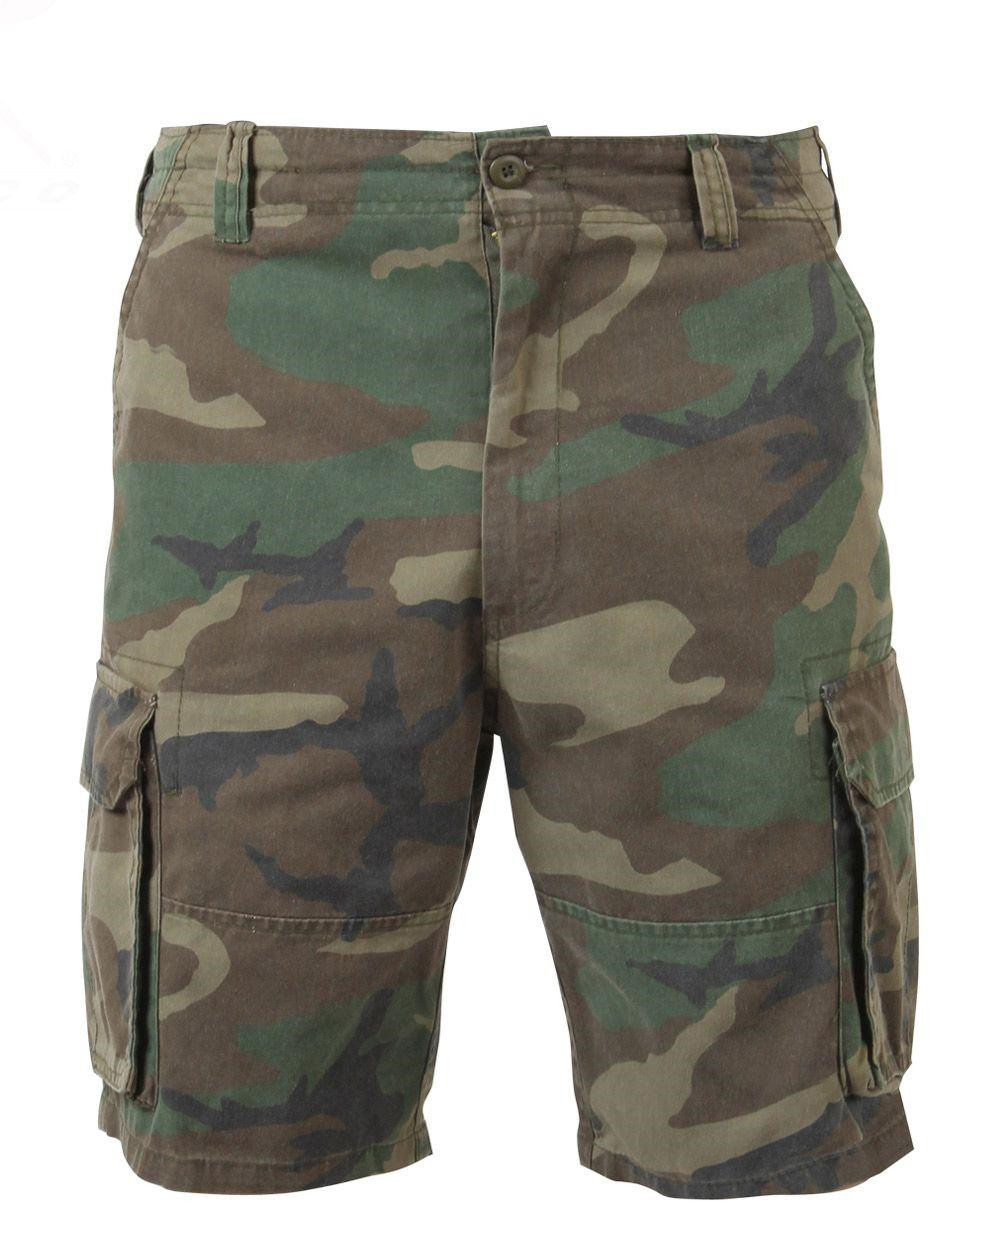 9: Rothco Cargo shorts (Woodland, XS)